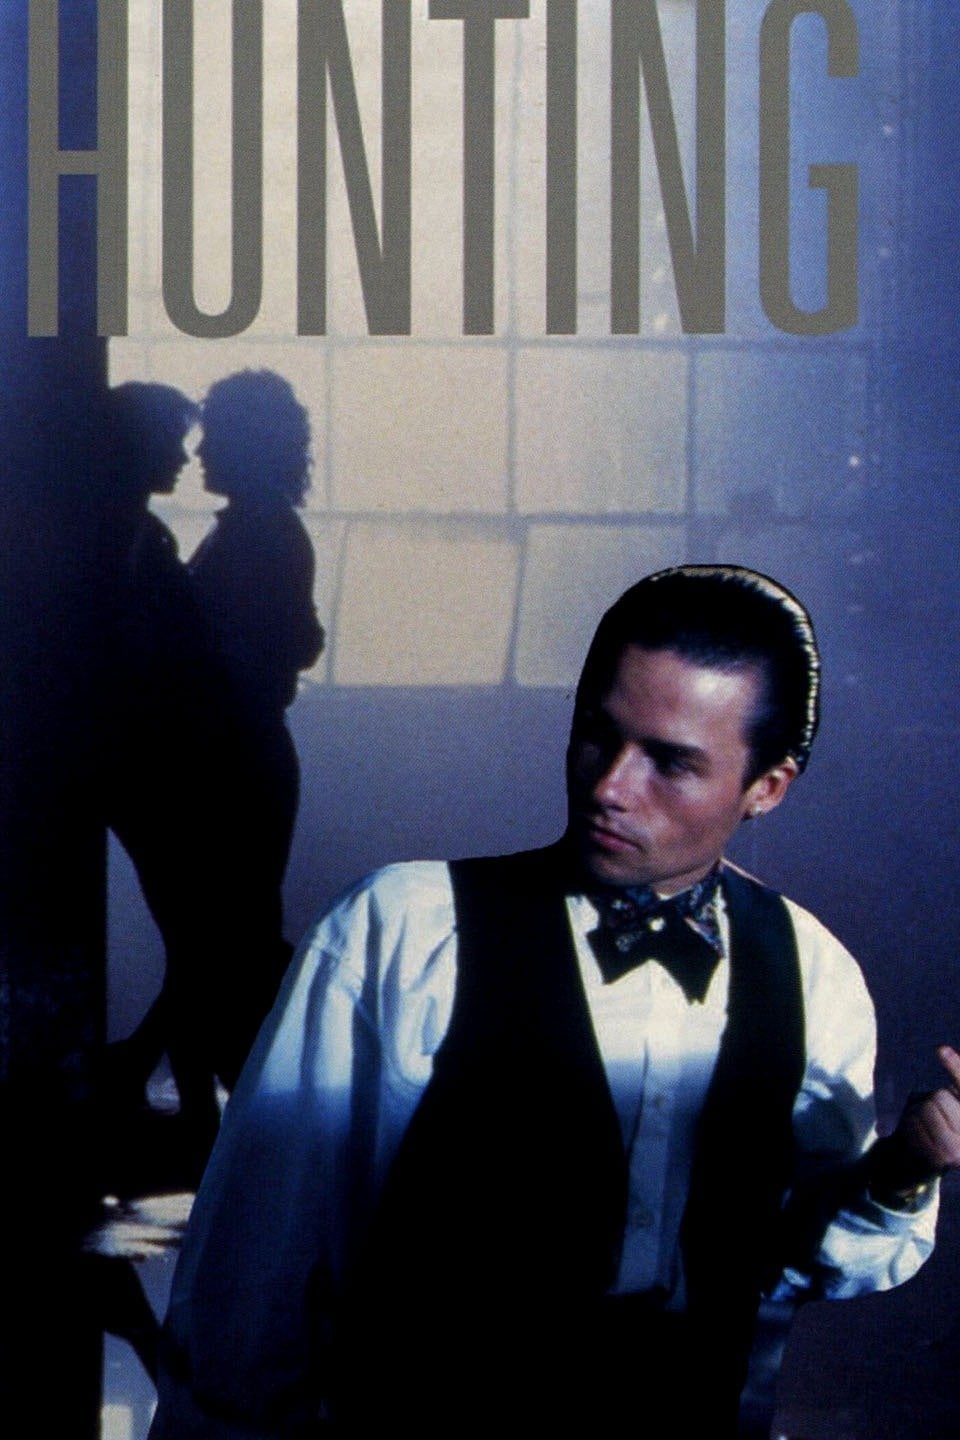 Hunting (1991)